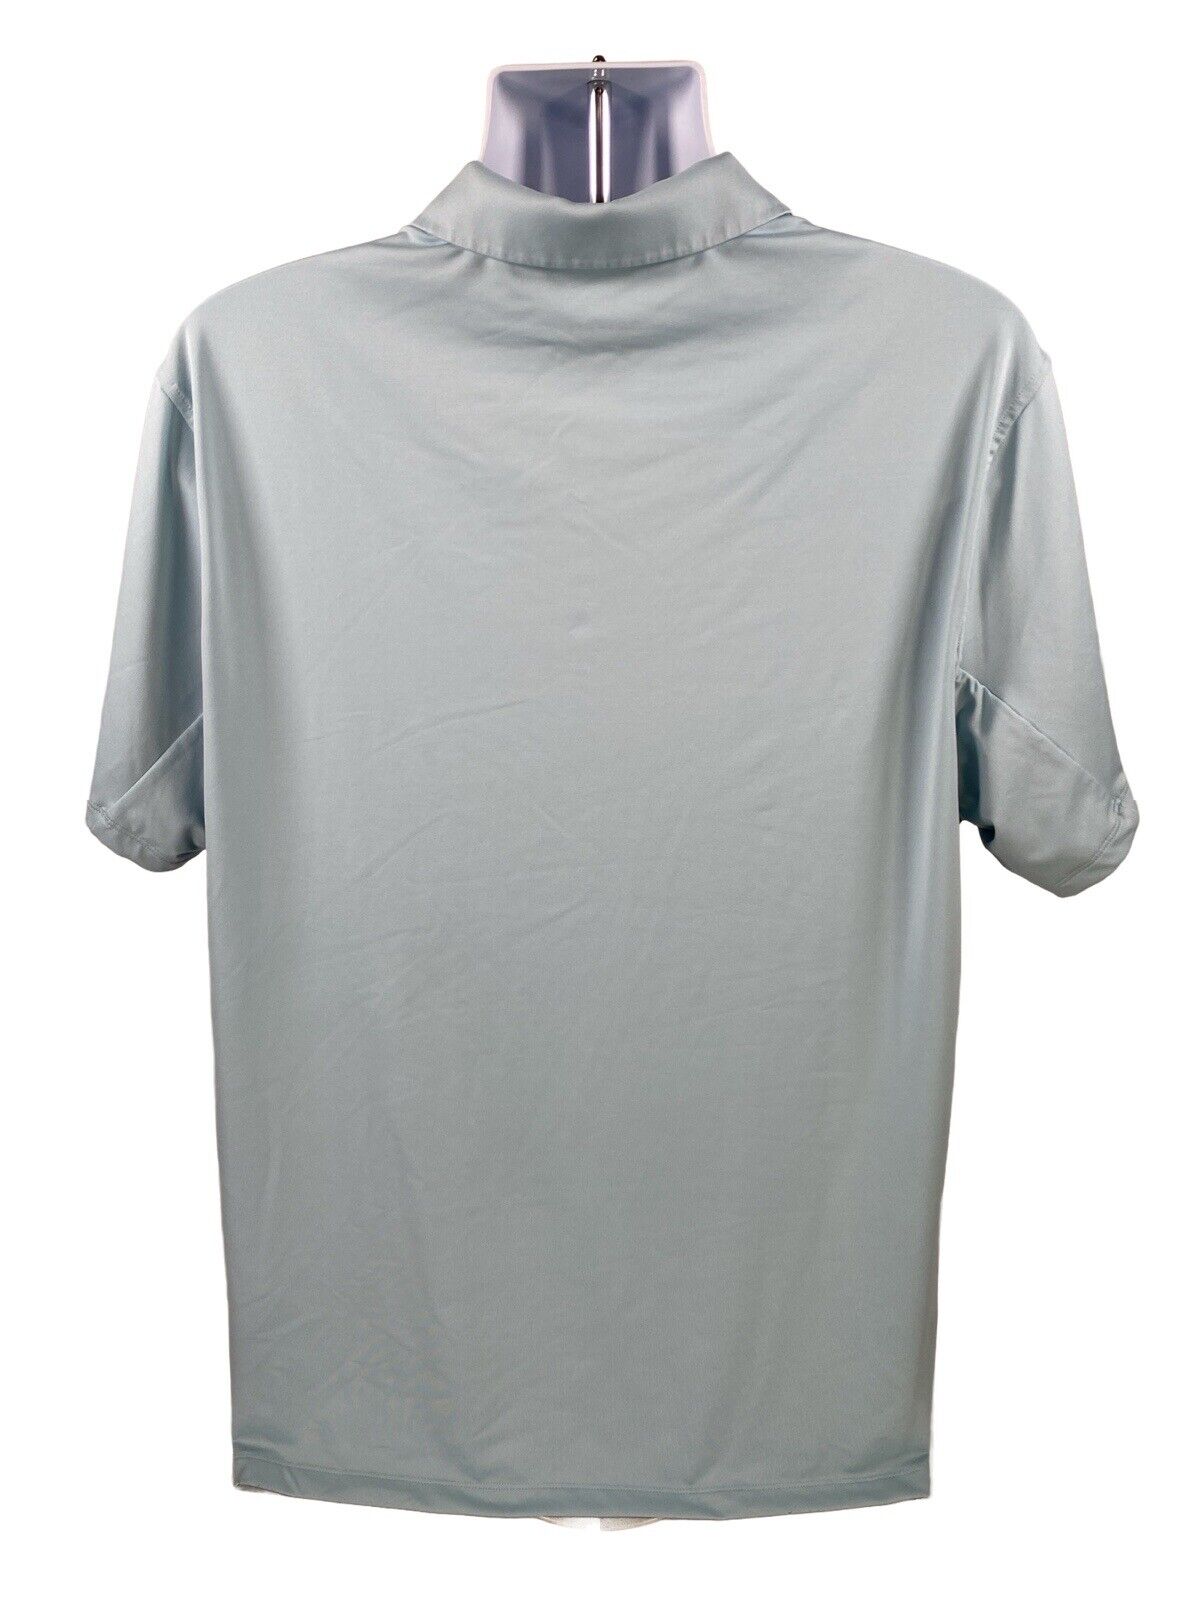 Nike Men's Blue Short Sleeve Golf Dri-Fit Polo Shirt - XL